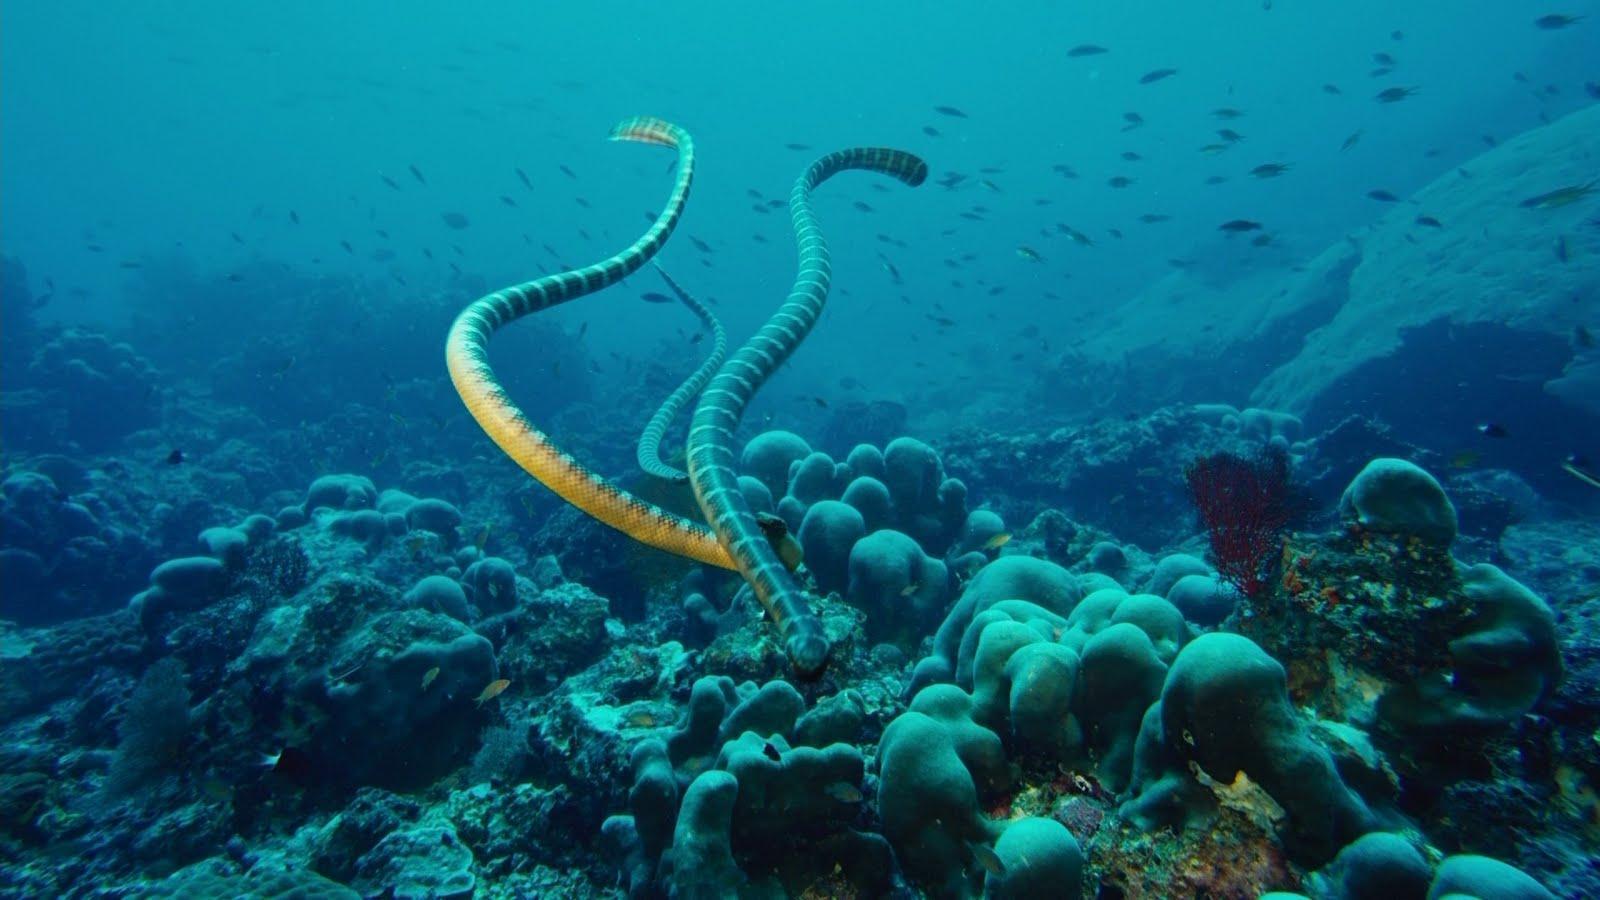 Download Under the Ocean Wallpaper whit Sea Snakes Desktop